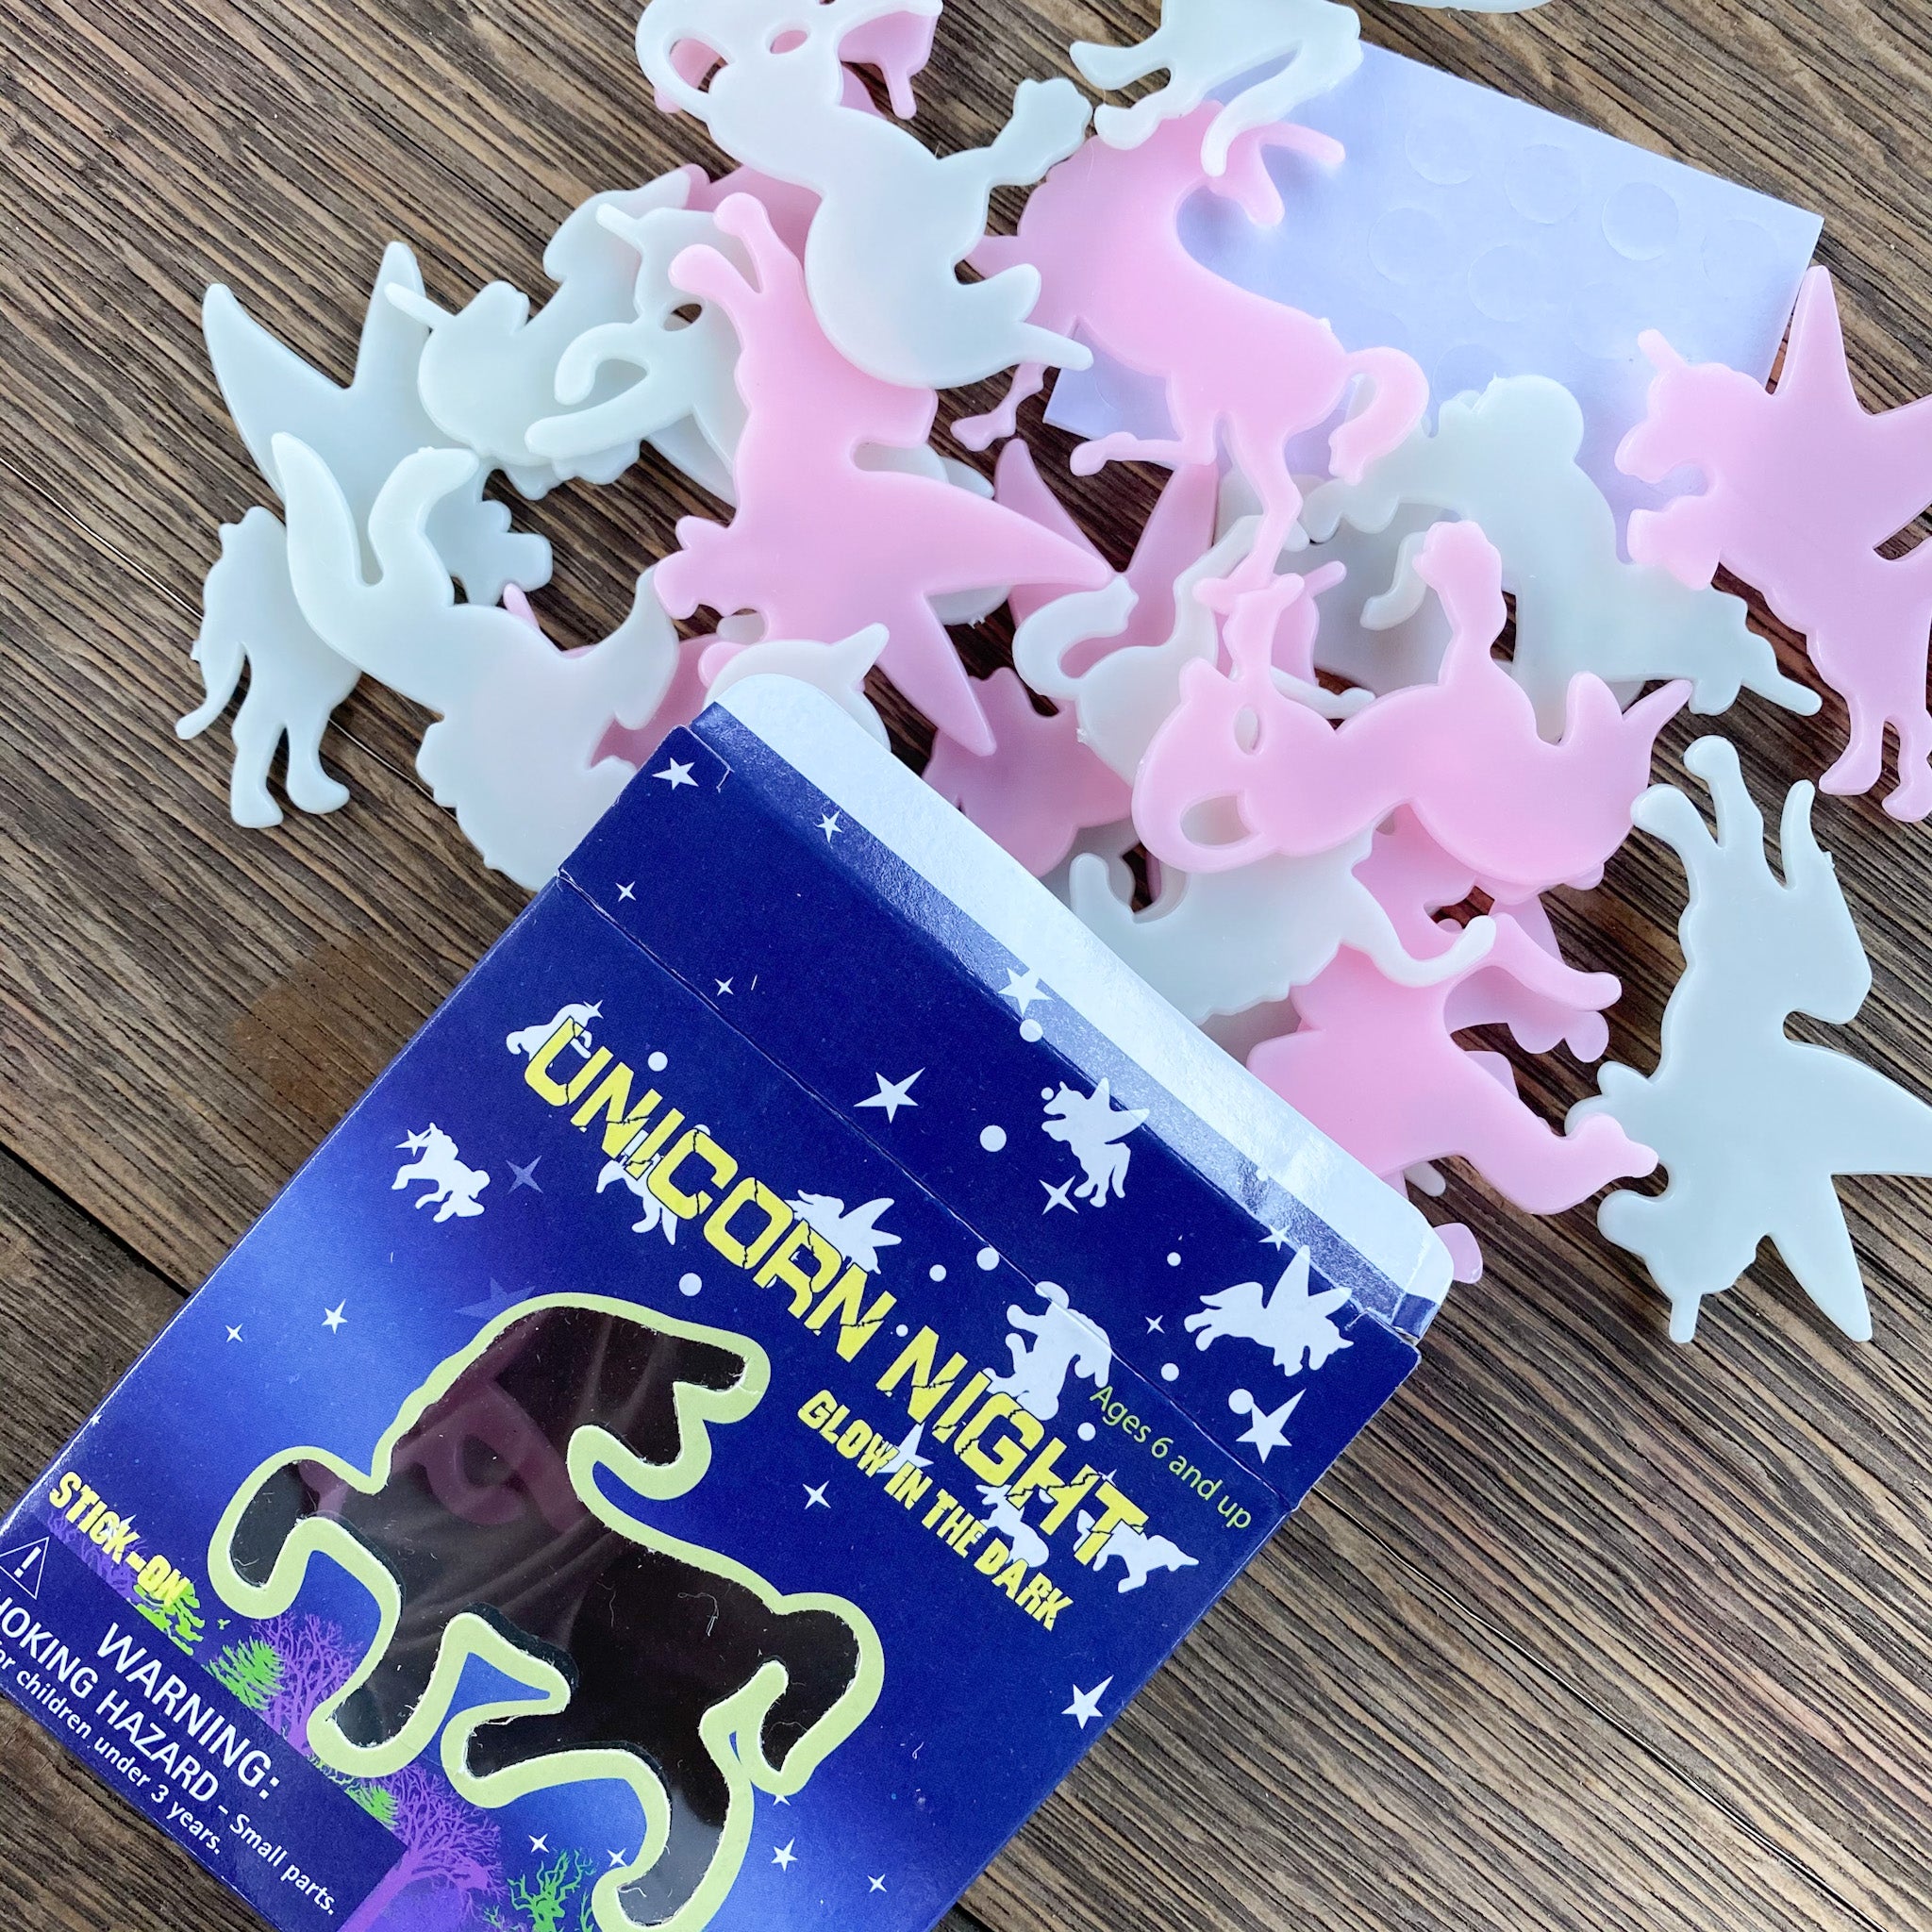 Glow in the Dark Unicorn Wall Stickers, 24 pieces